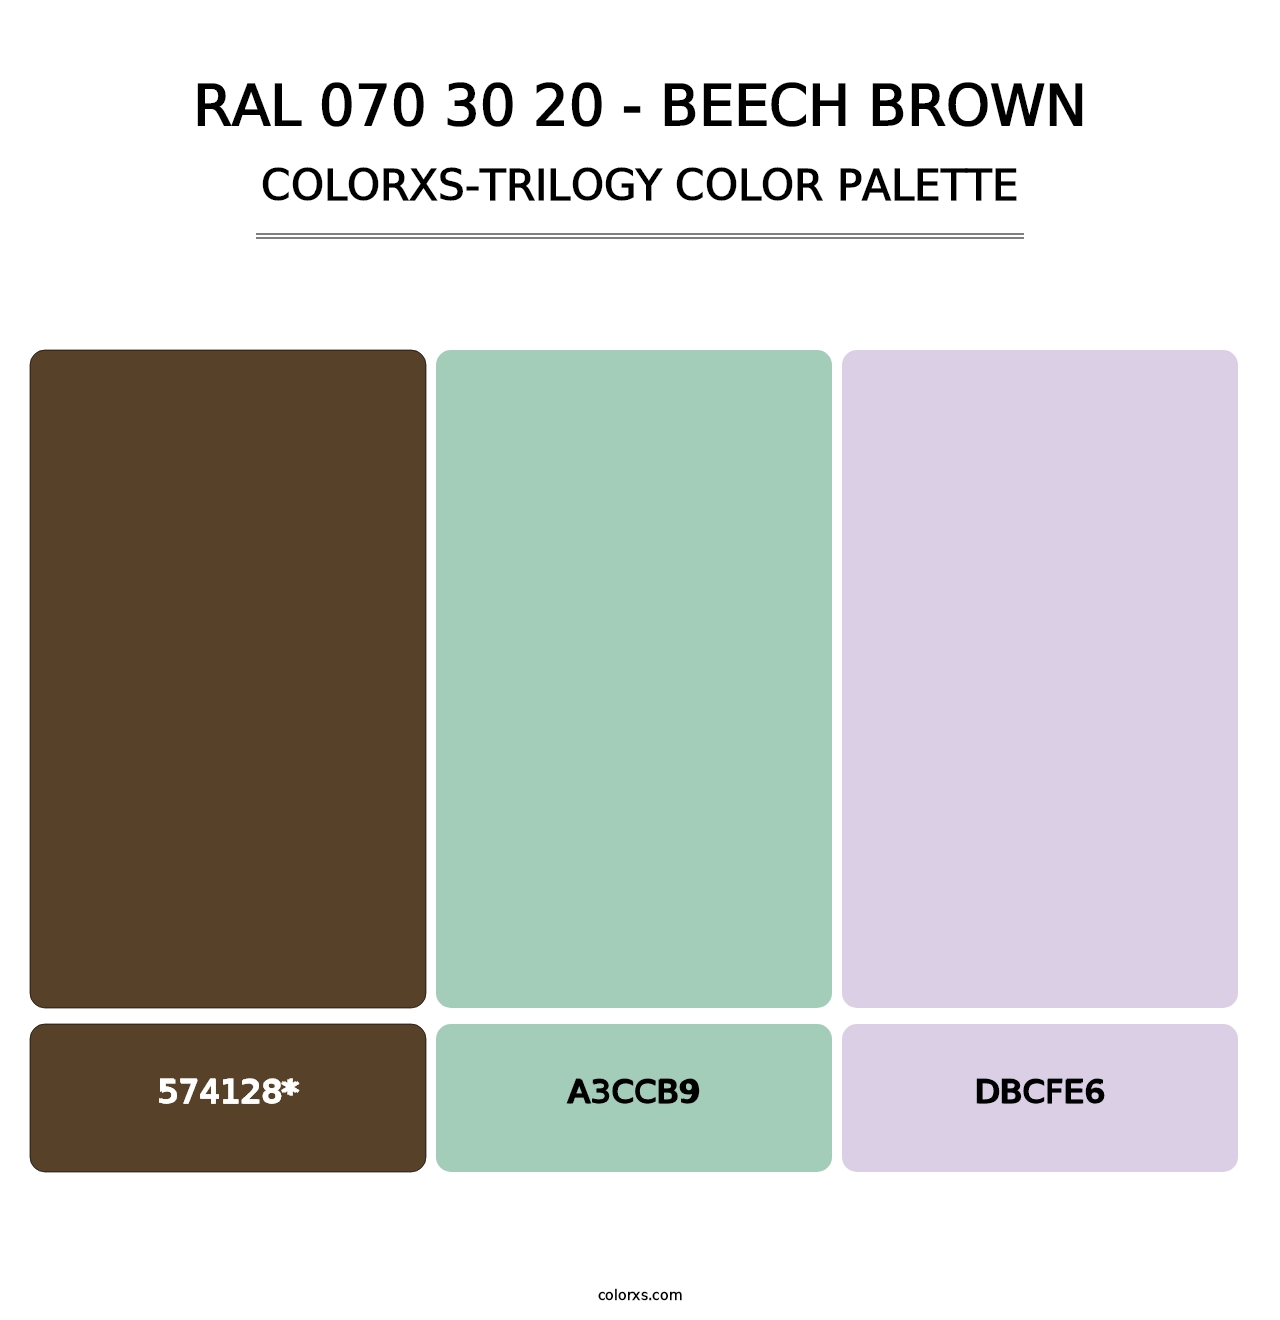 RAL 070 30 20 - Beech Brown - Colorxs Trilogy Palette